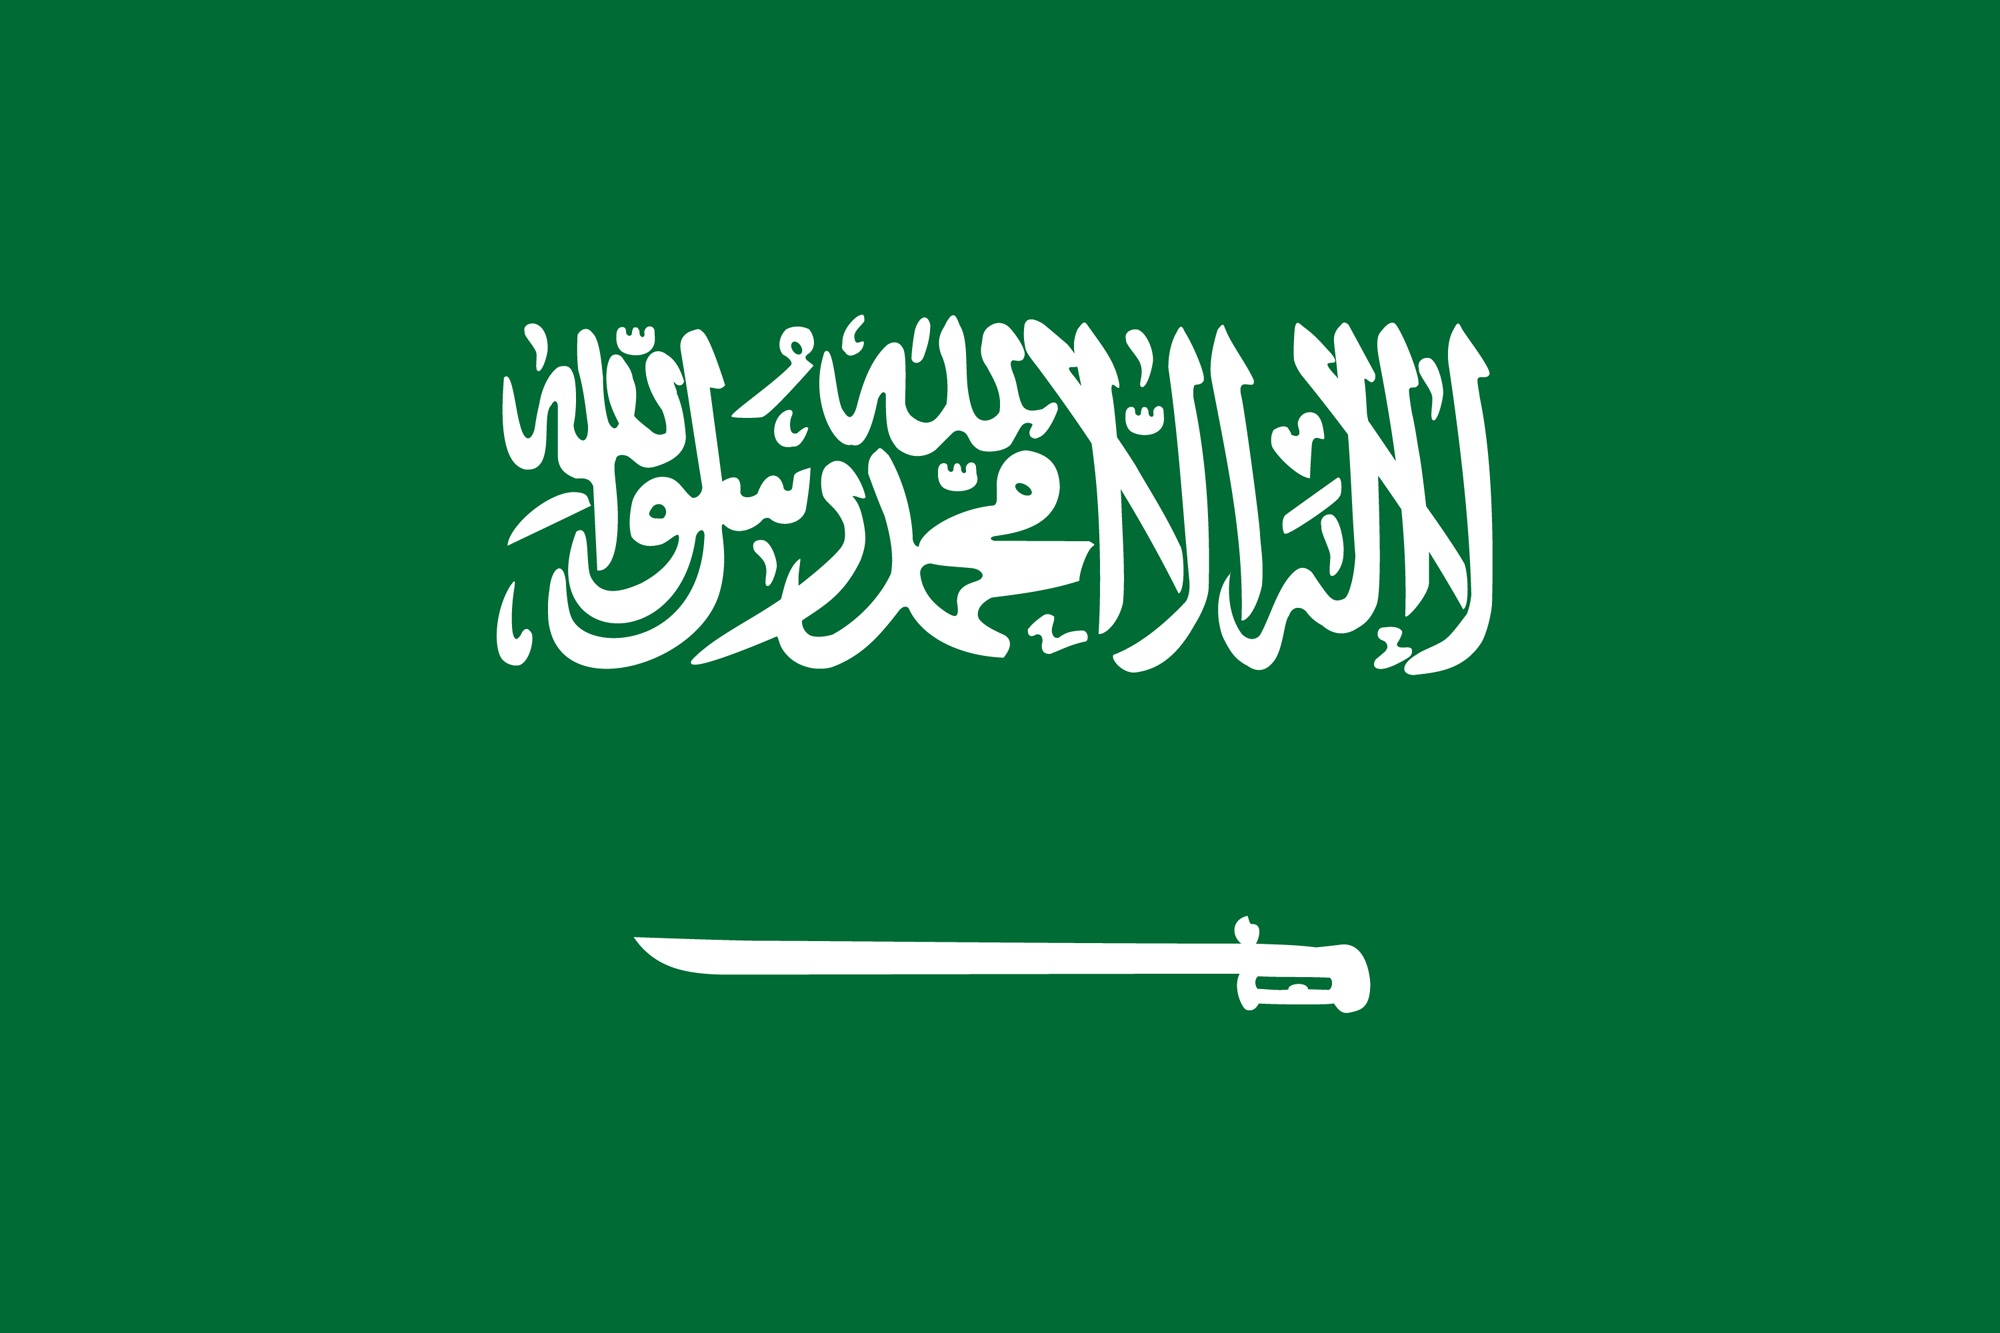 Saudi Arabia Prayer of the Day - Today's Prayer of the Day focuses on the country of Saudi Arabia. #SaudiArabia #PrayeroftheDay